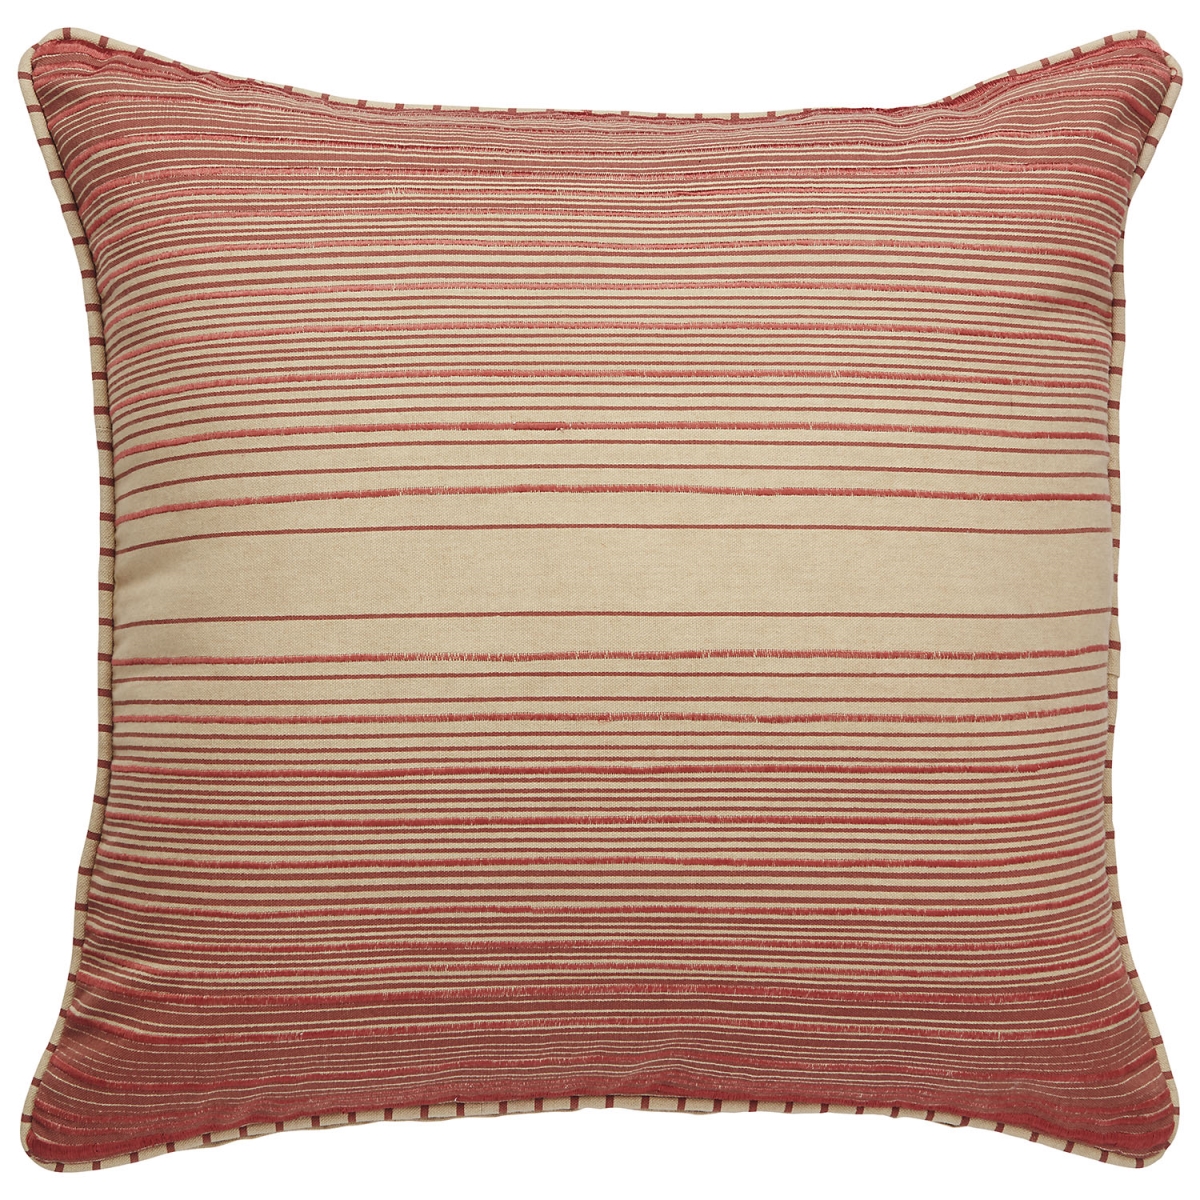 Plw102785 20 X 20 In. Charmed Jennifer Adams Reed Red & Cream Stripe Down Throw Pillow